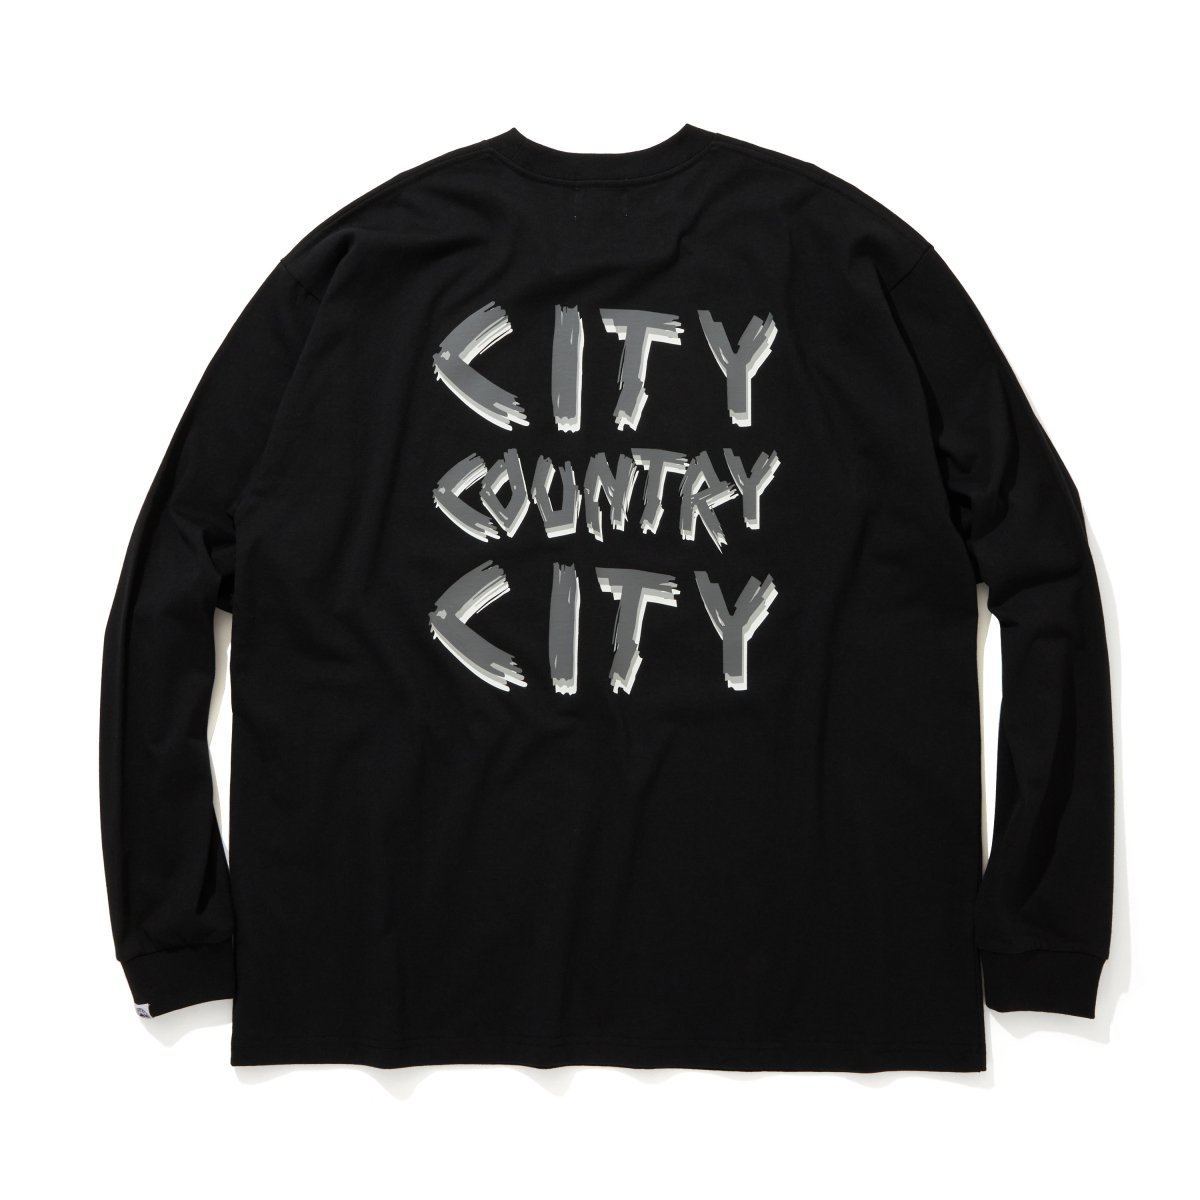 CITY COUNTRY CITY <BR>Cotton L/sT-shirt_CityCountryCity (BLACK)
